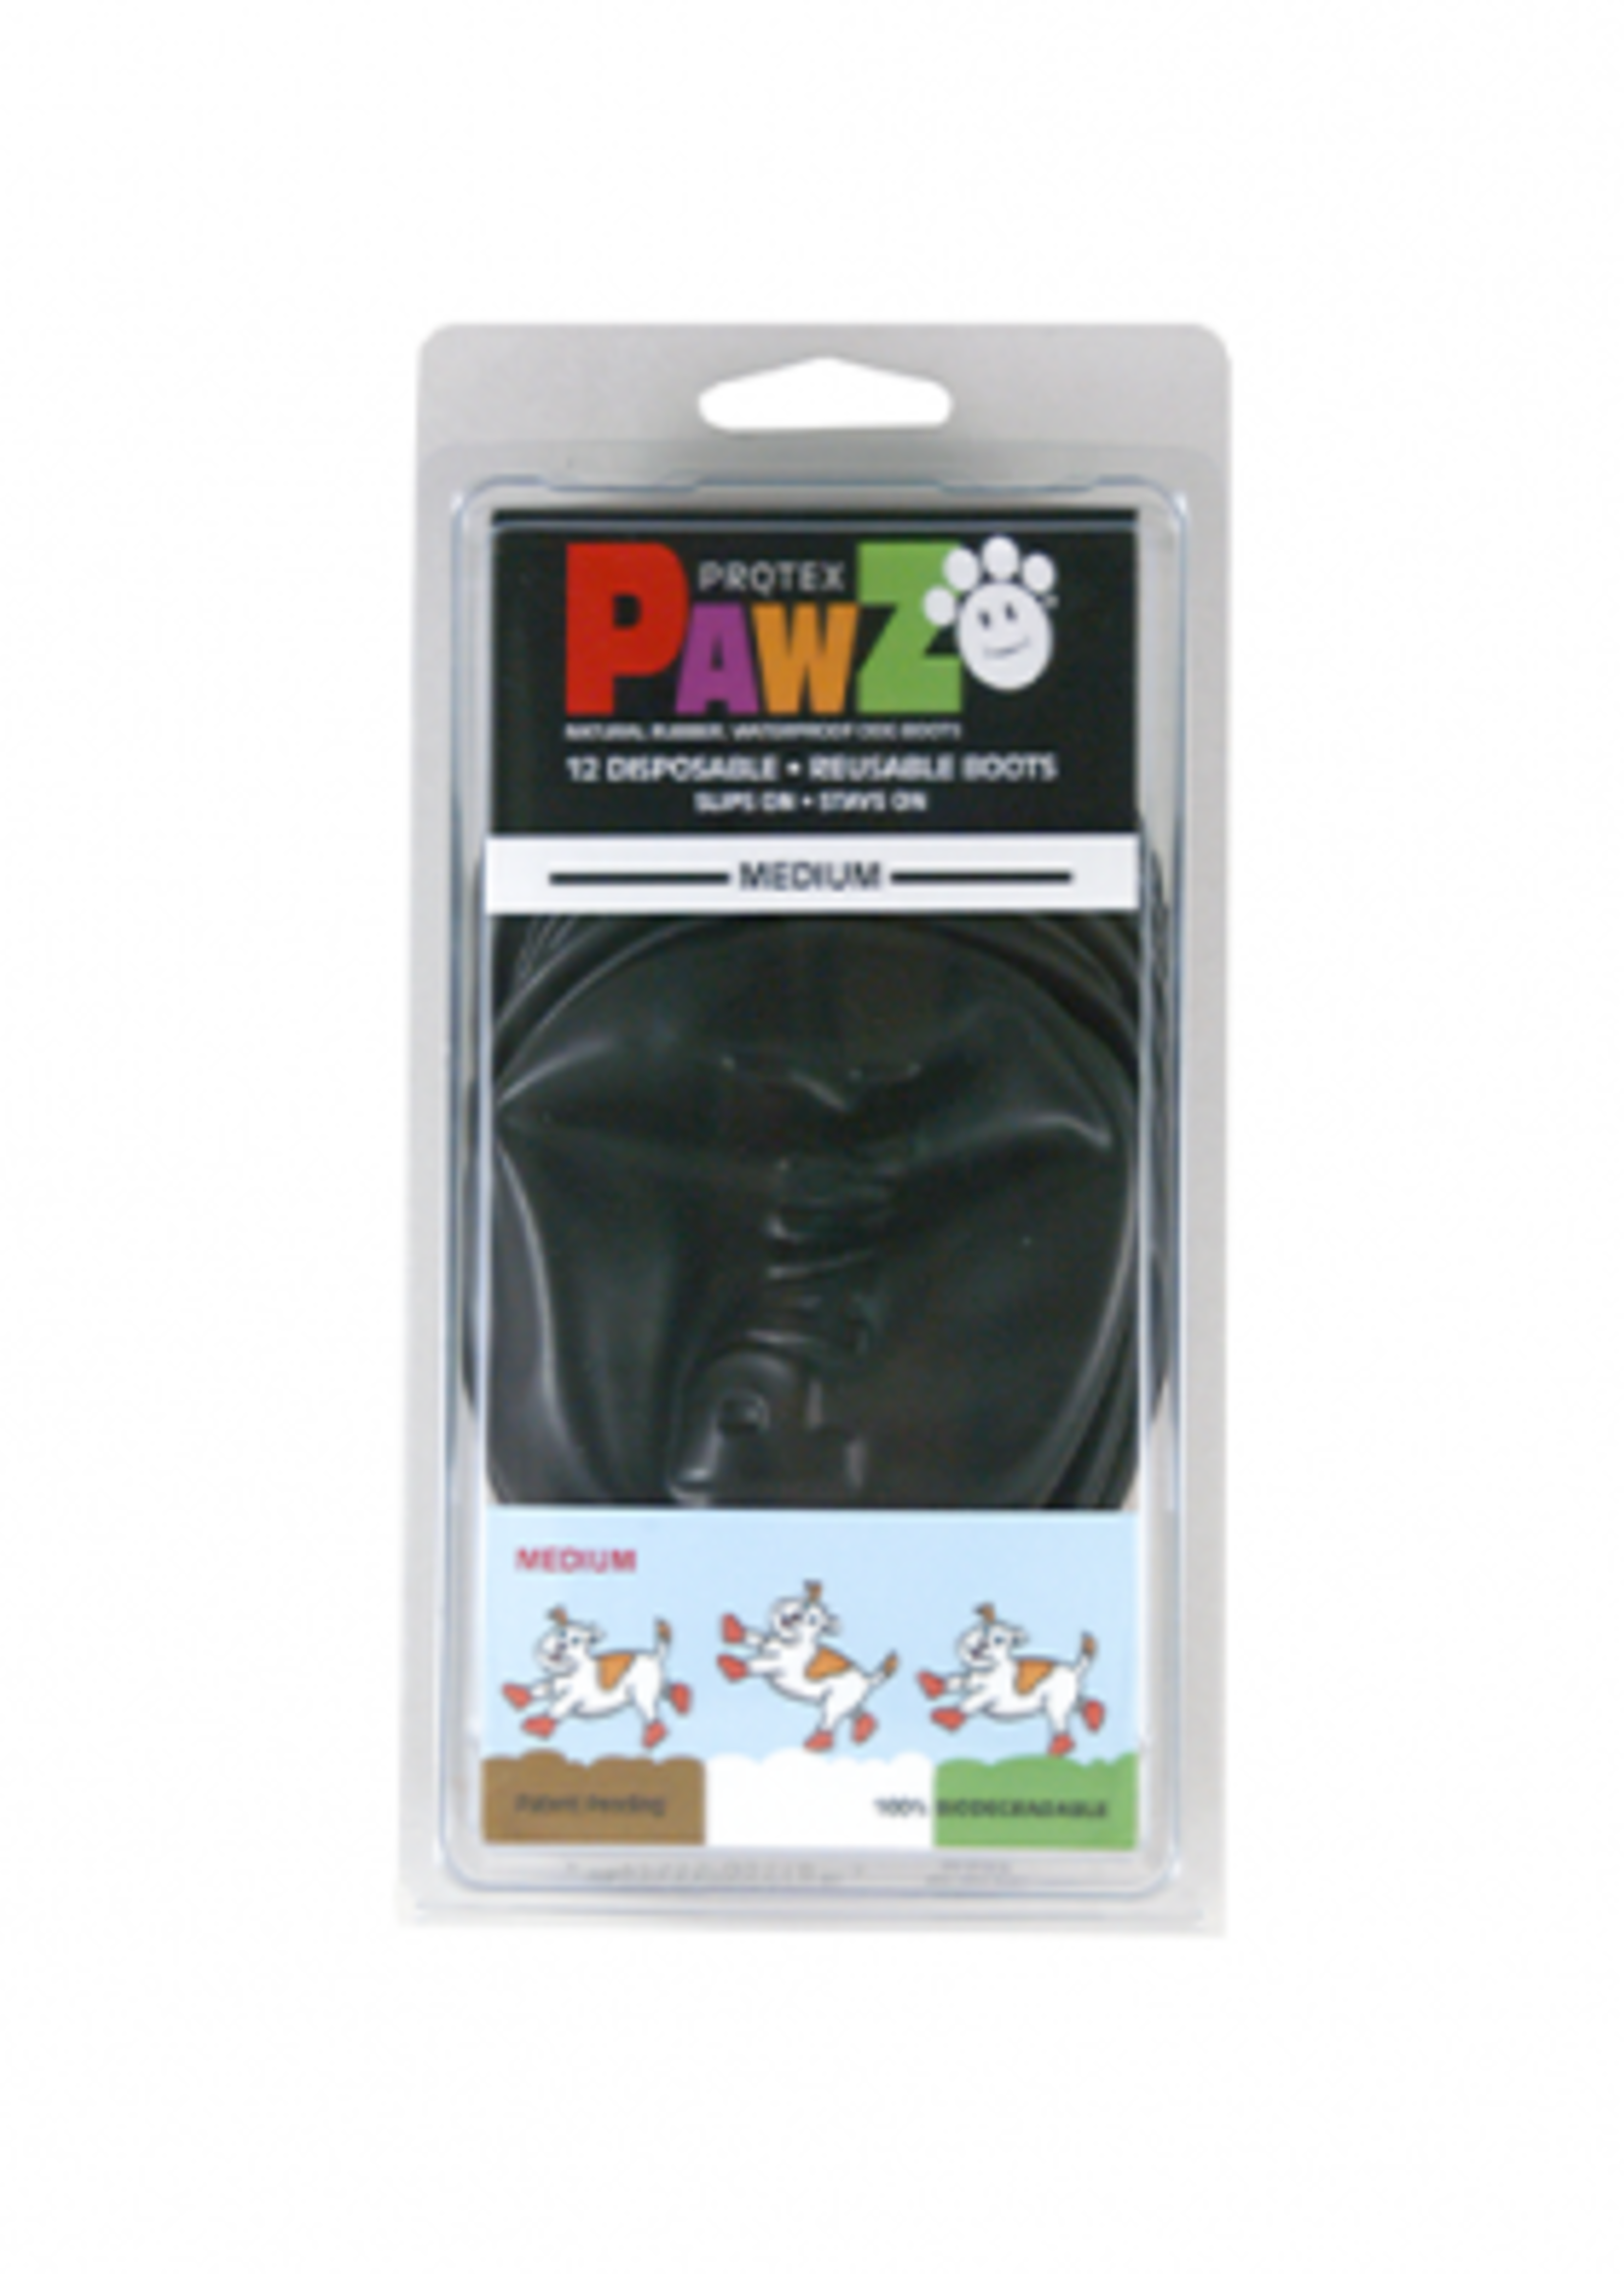 PawZ Pawz Dog Boots Medium Black